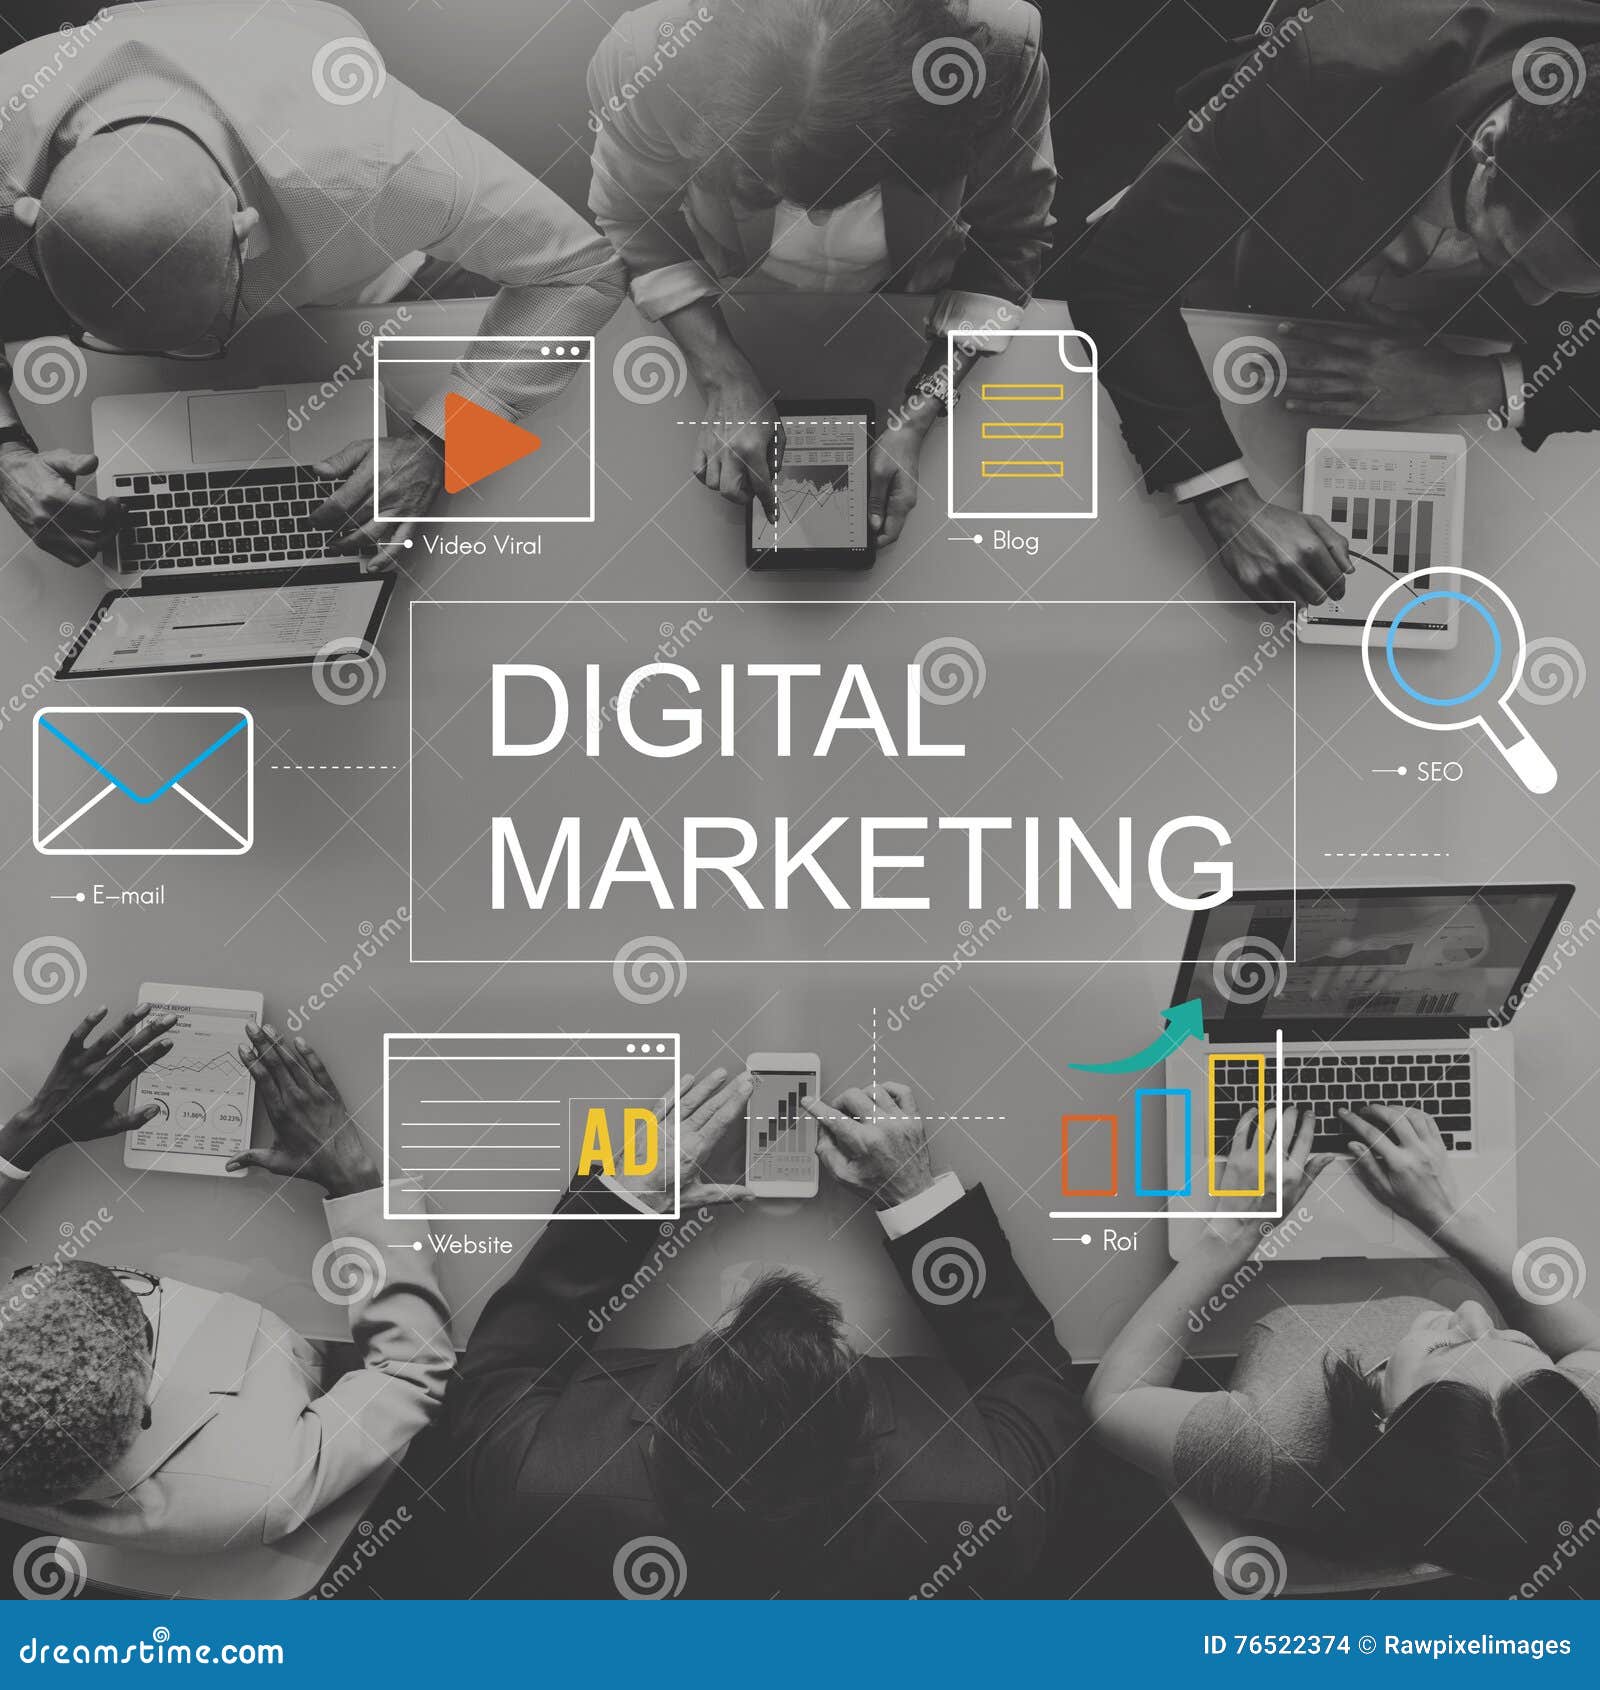 digital marketing media technology graphic concept